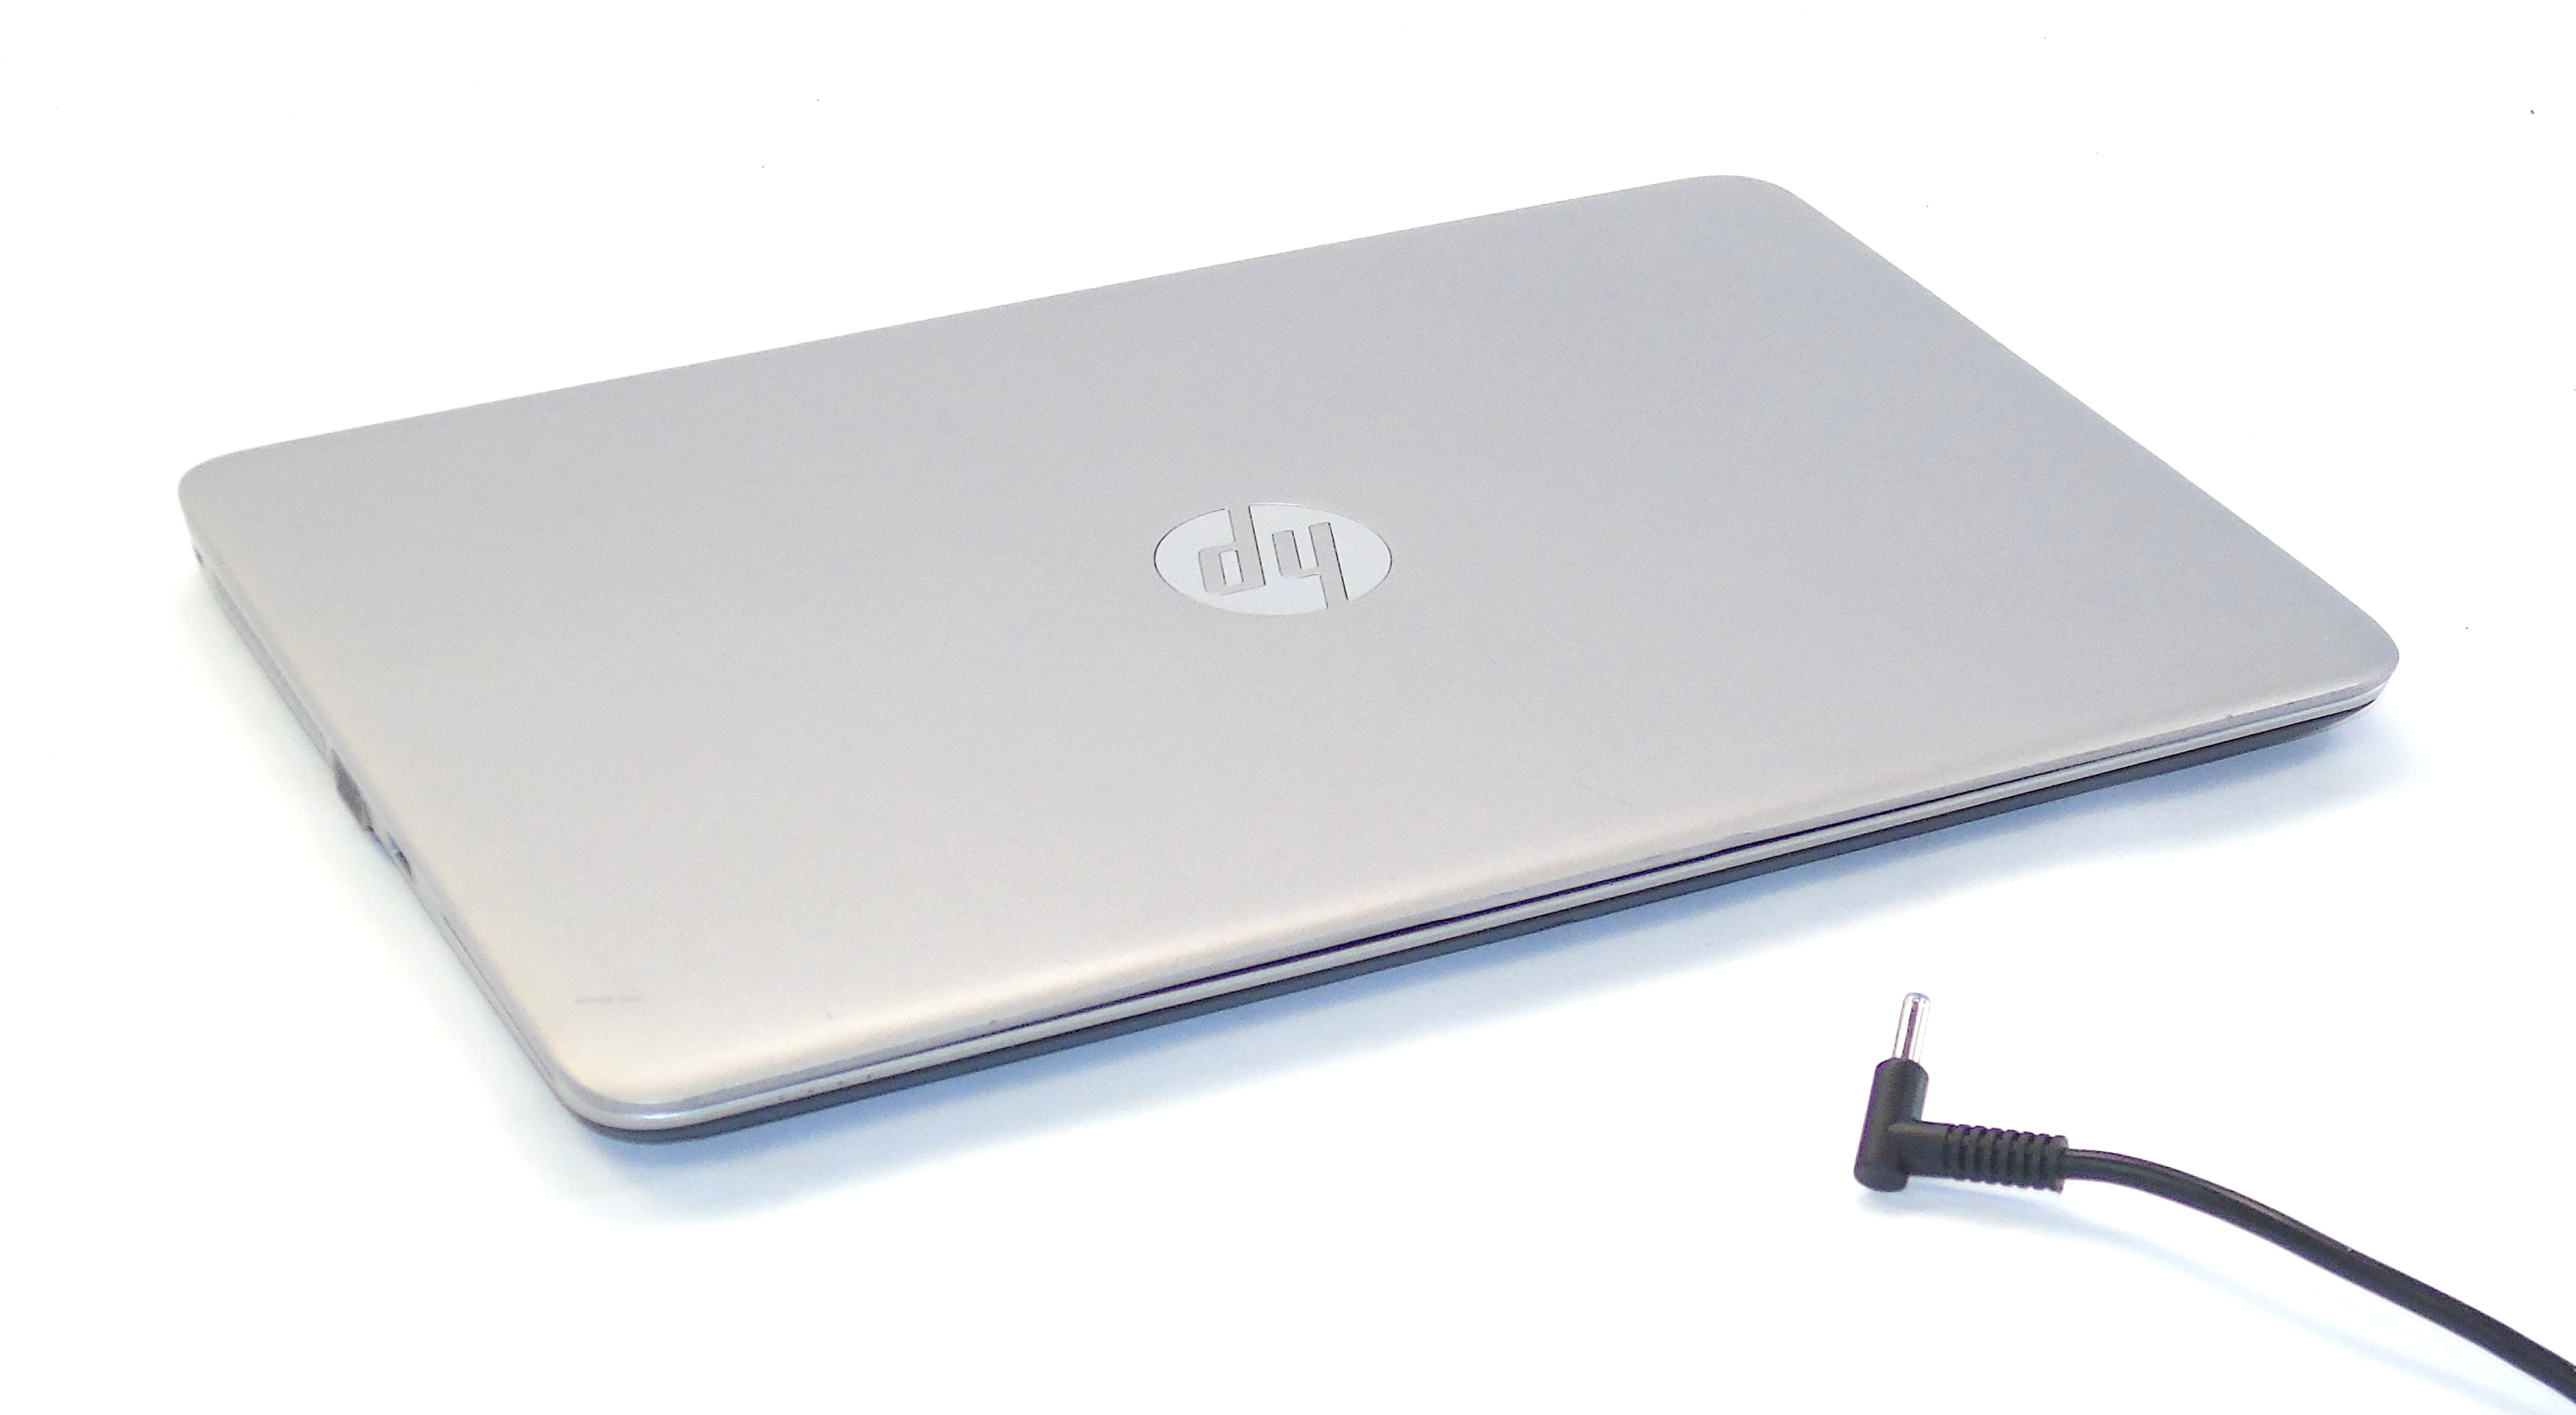 HP EliteBook 840 G4 Laptop, 13.9" i7 7th Gen, 8GB RAM, 256GB SSD, Windows 11